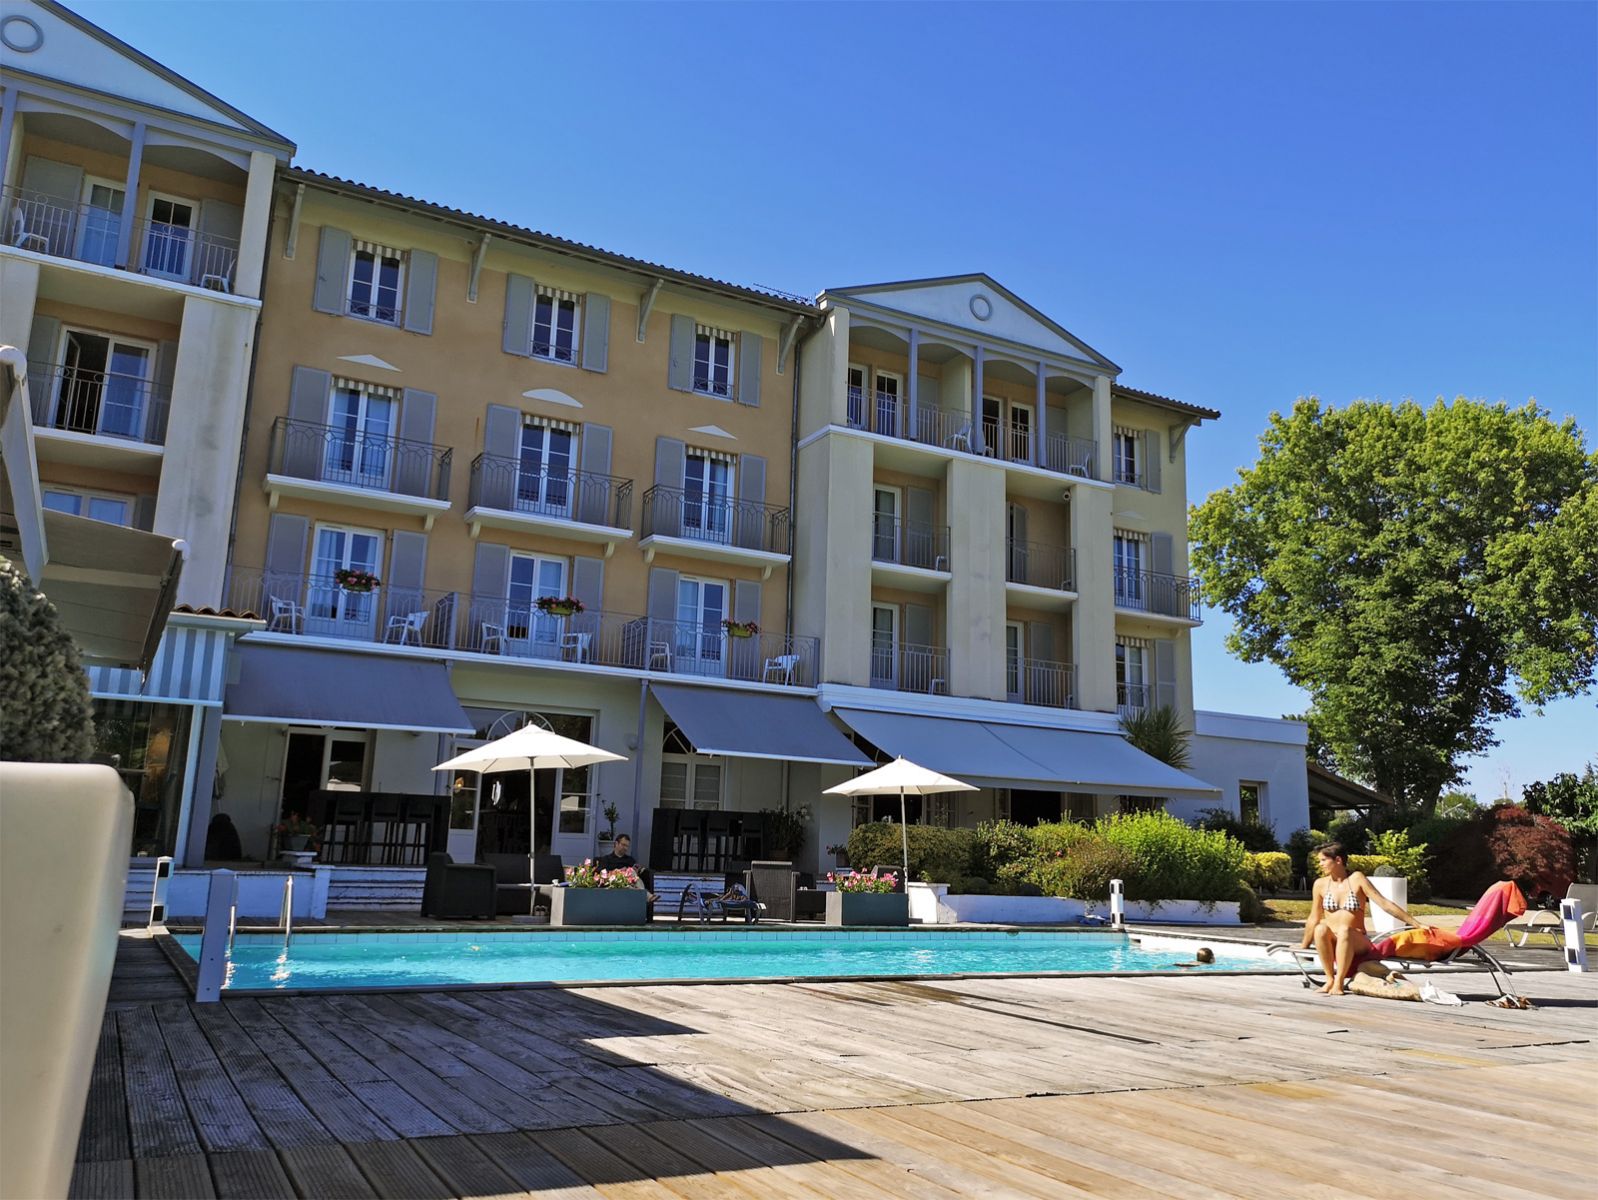 Hotel Restaurant * Le Lodge * in Salies-de-Béarn